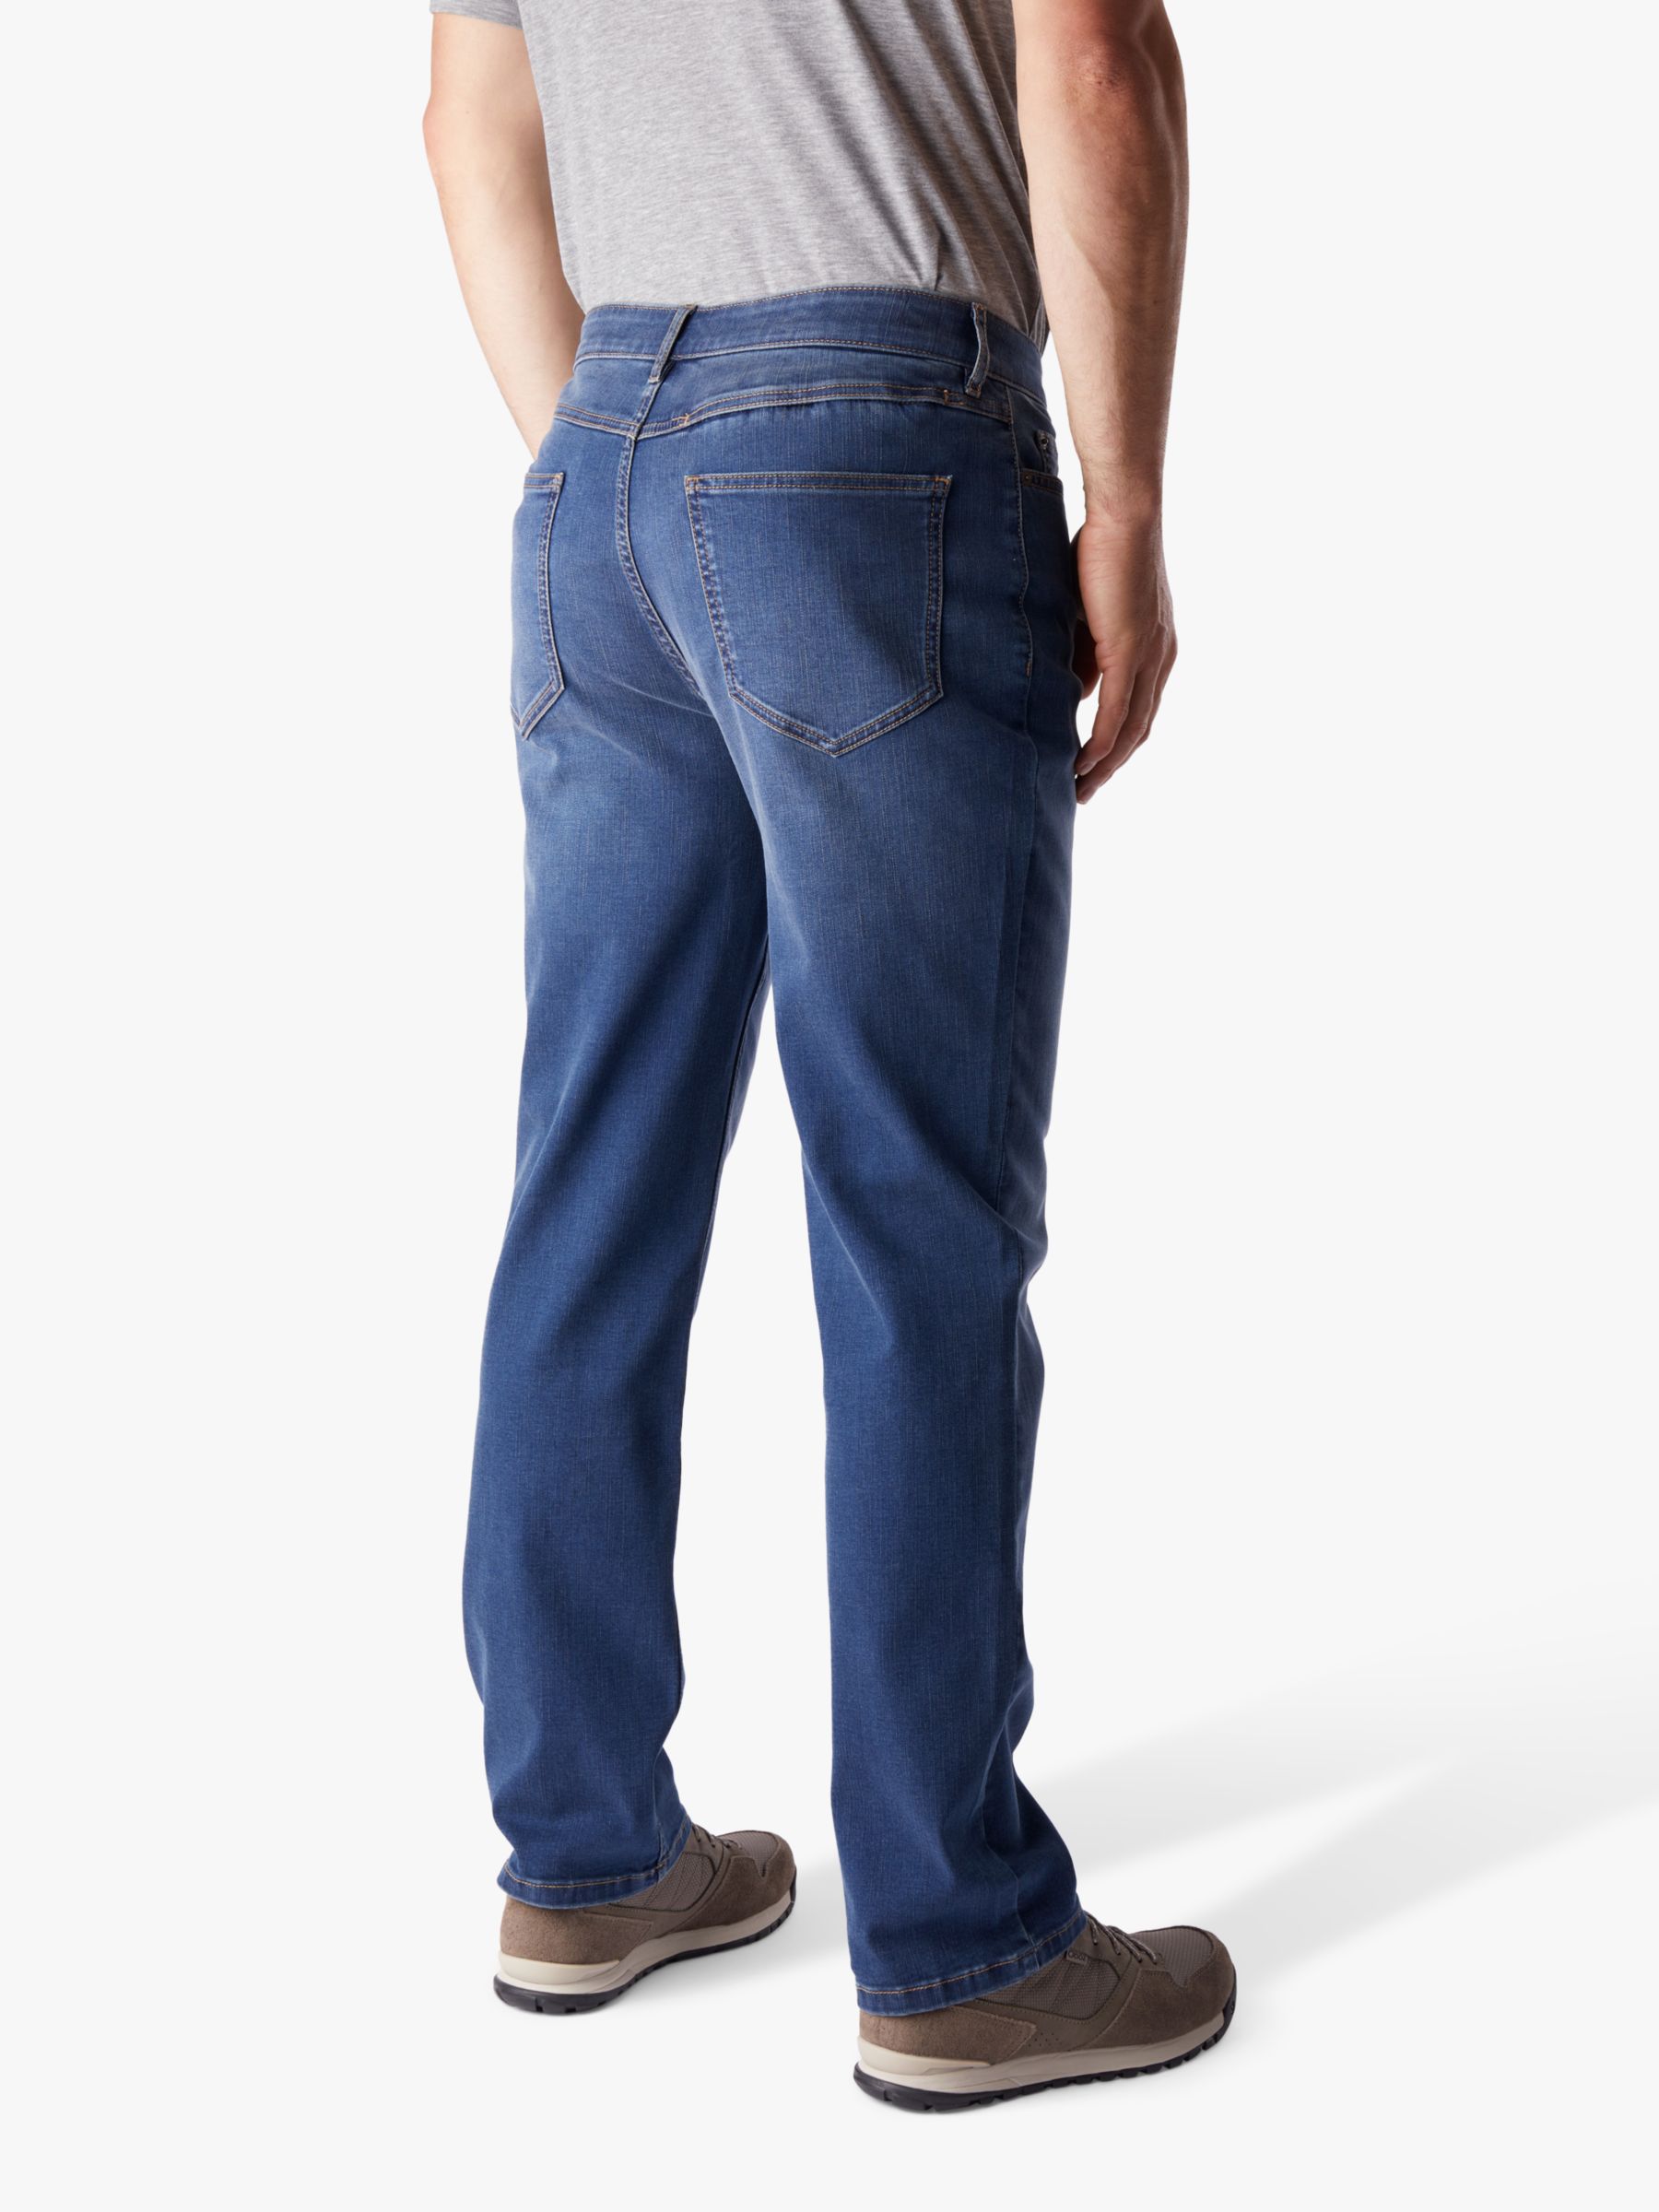 Rohan Flex Men's Classic Fit Jeans, Mid Denim, 36R